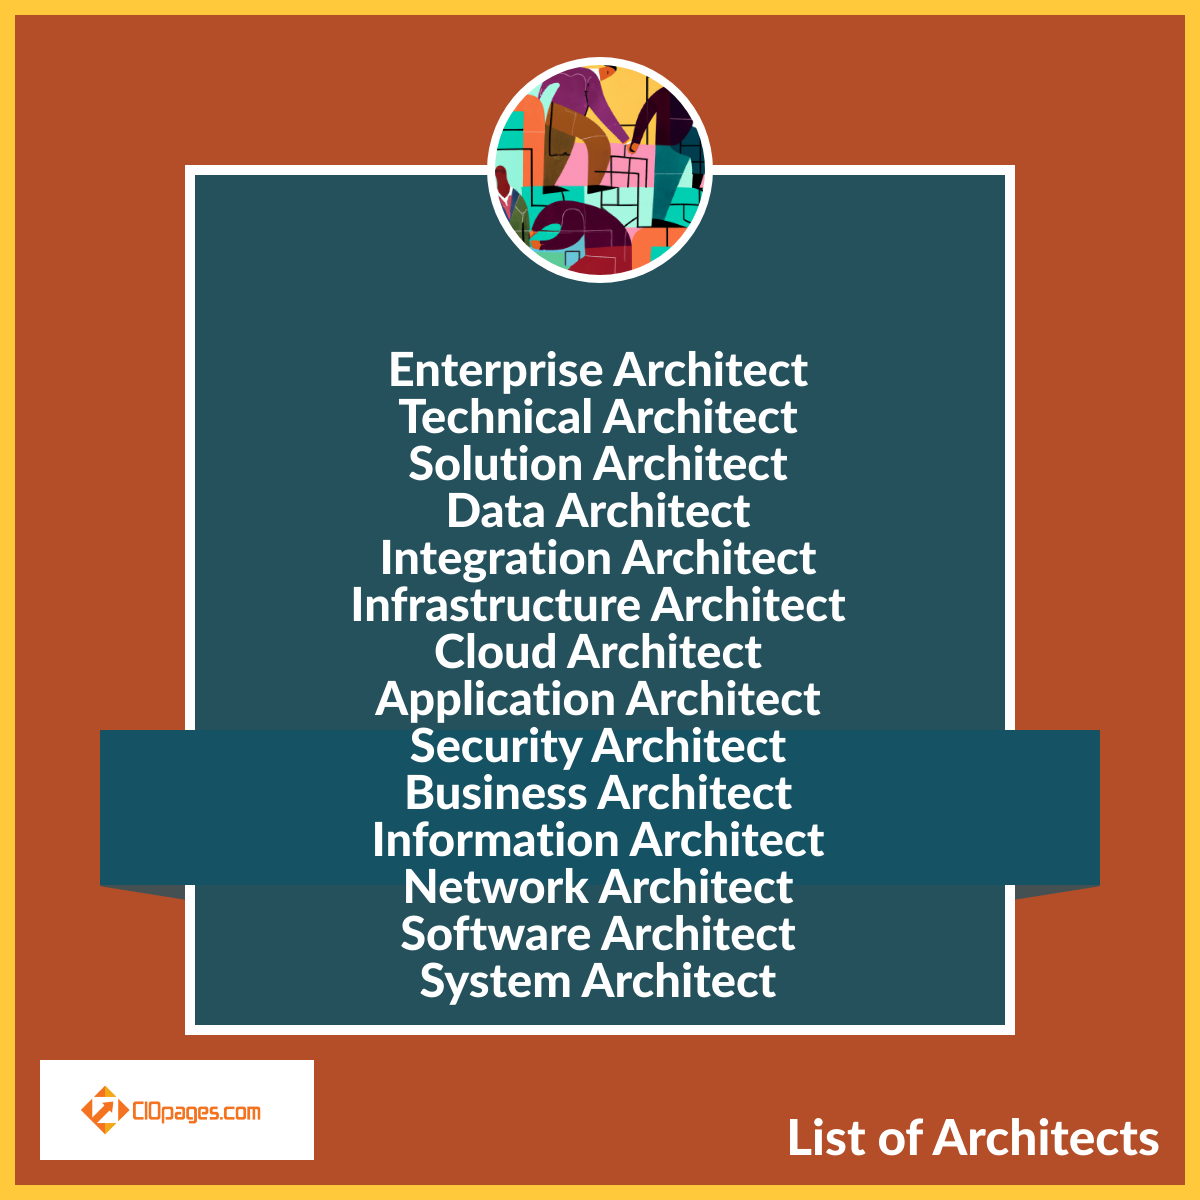 A Comprehensive List of Architect Roles